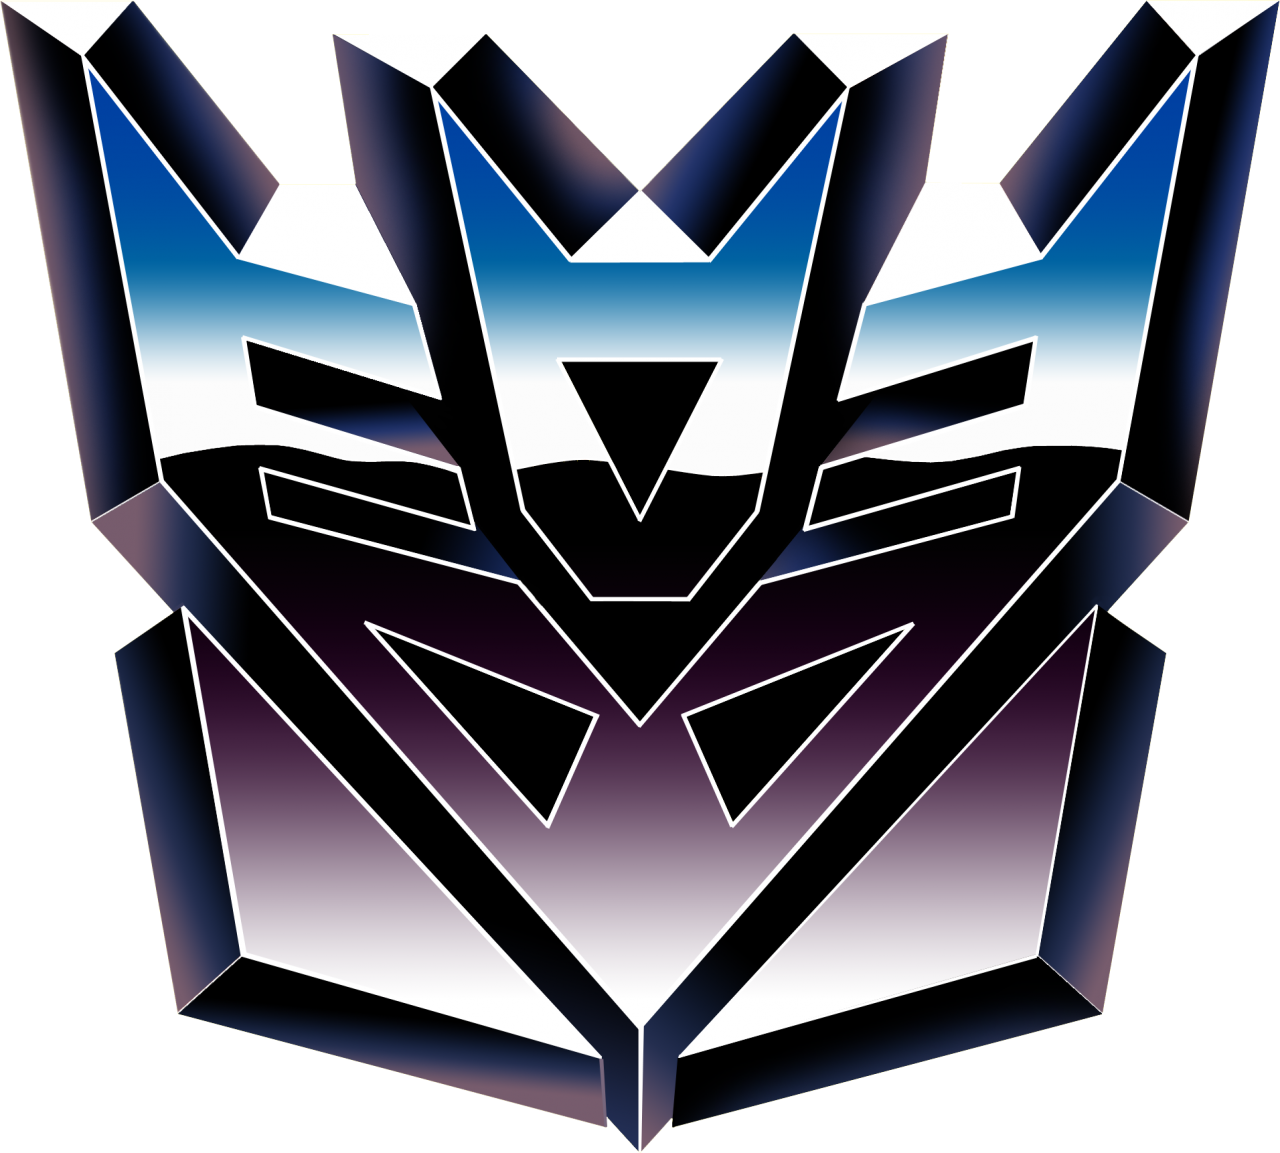 Transformers Logos PNG Image - PurePNG | Free transparent CC0 PNG Image